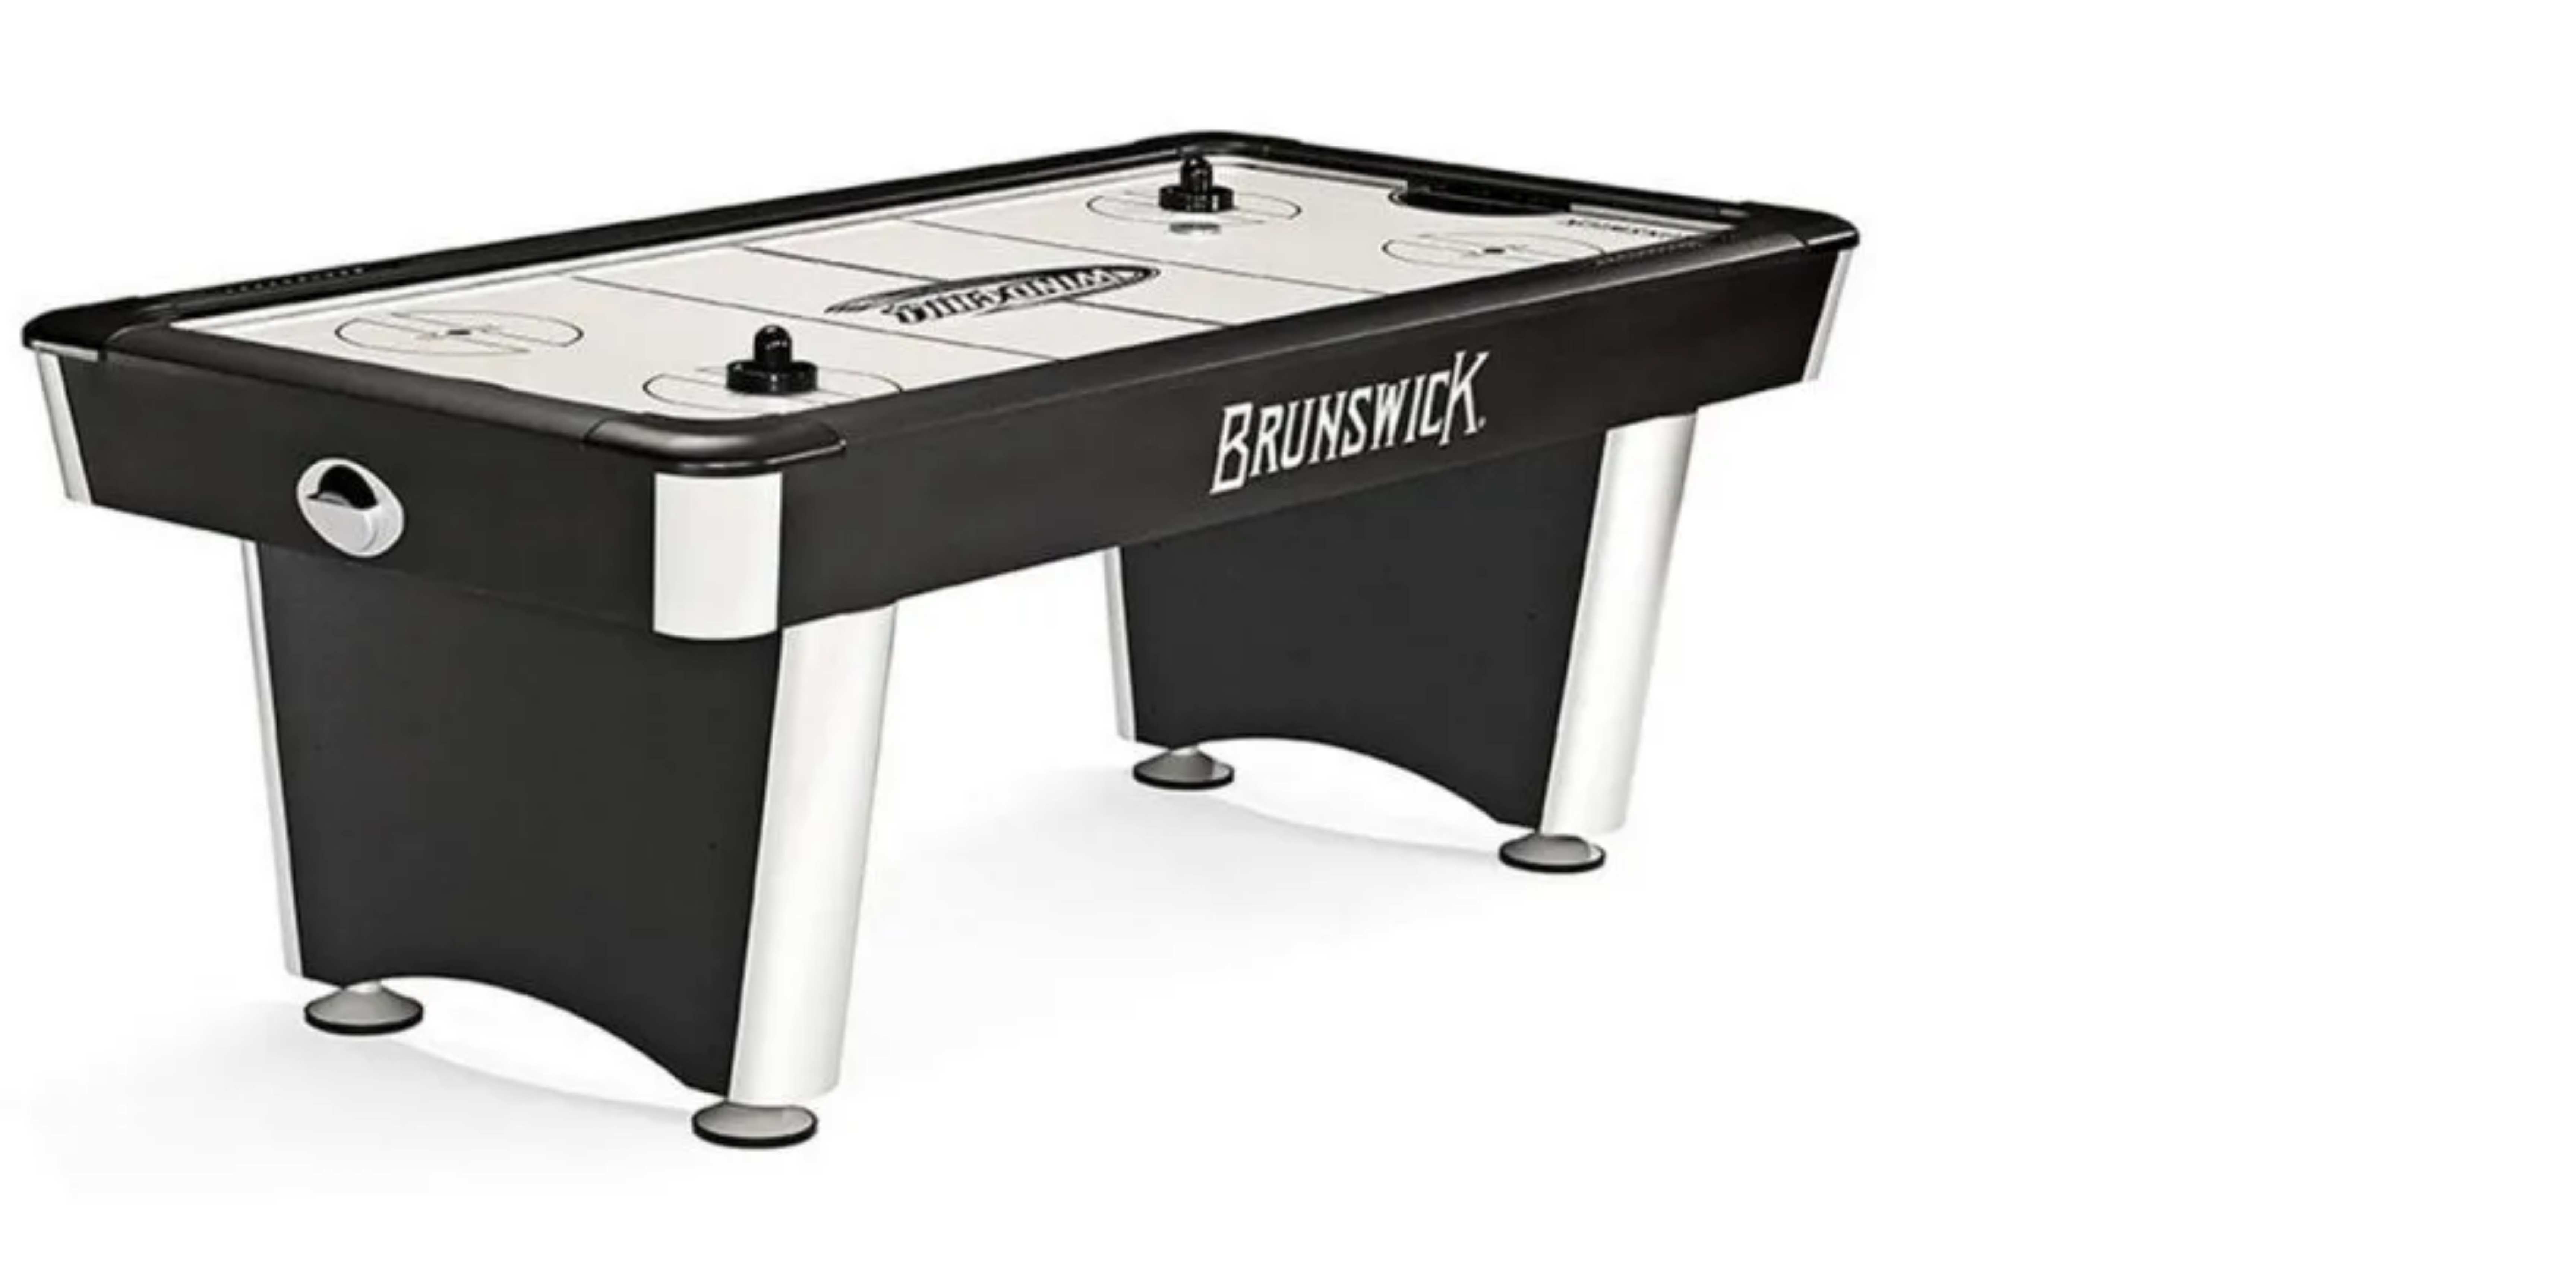 Air hockey table with a monochrome theme and a sleek design